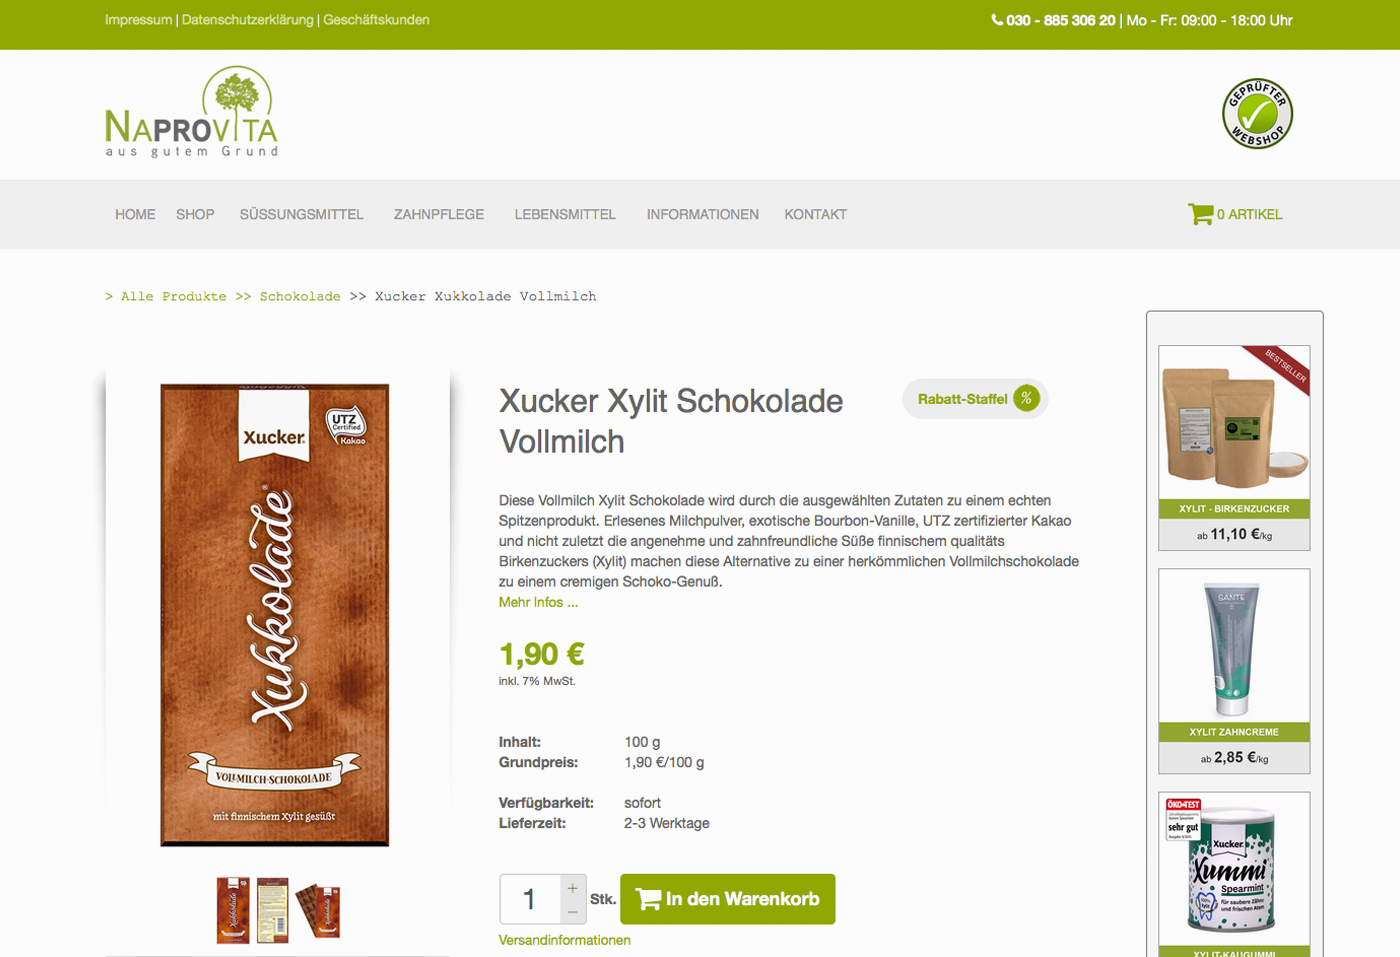 Navarts Webdesign Berlin - Naprovita Produkte